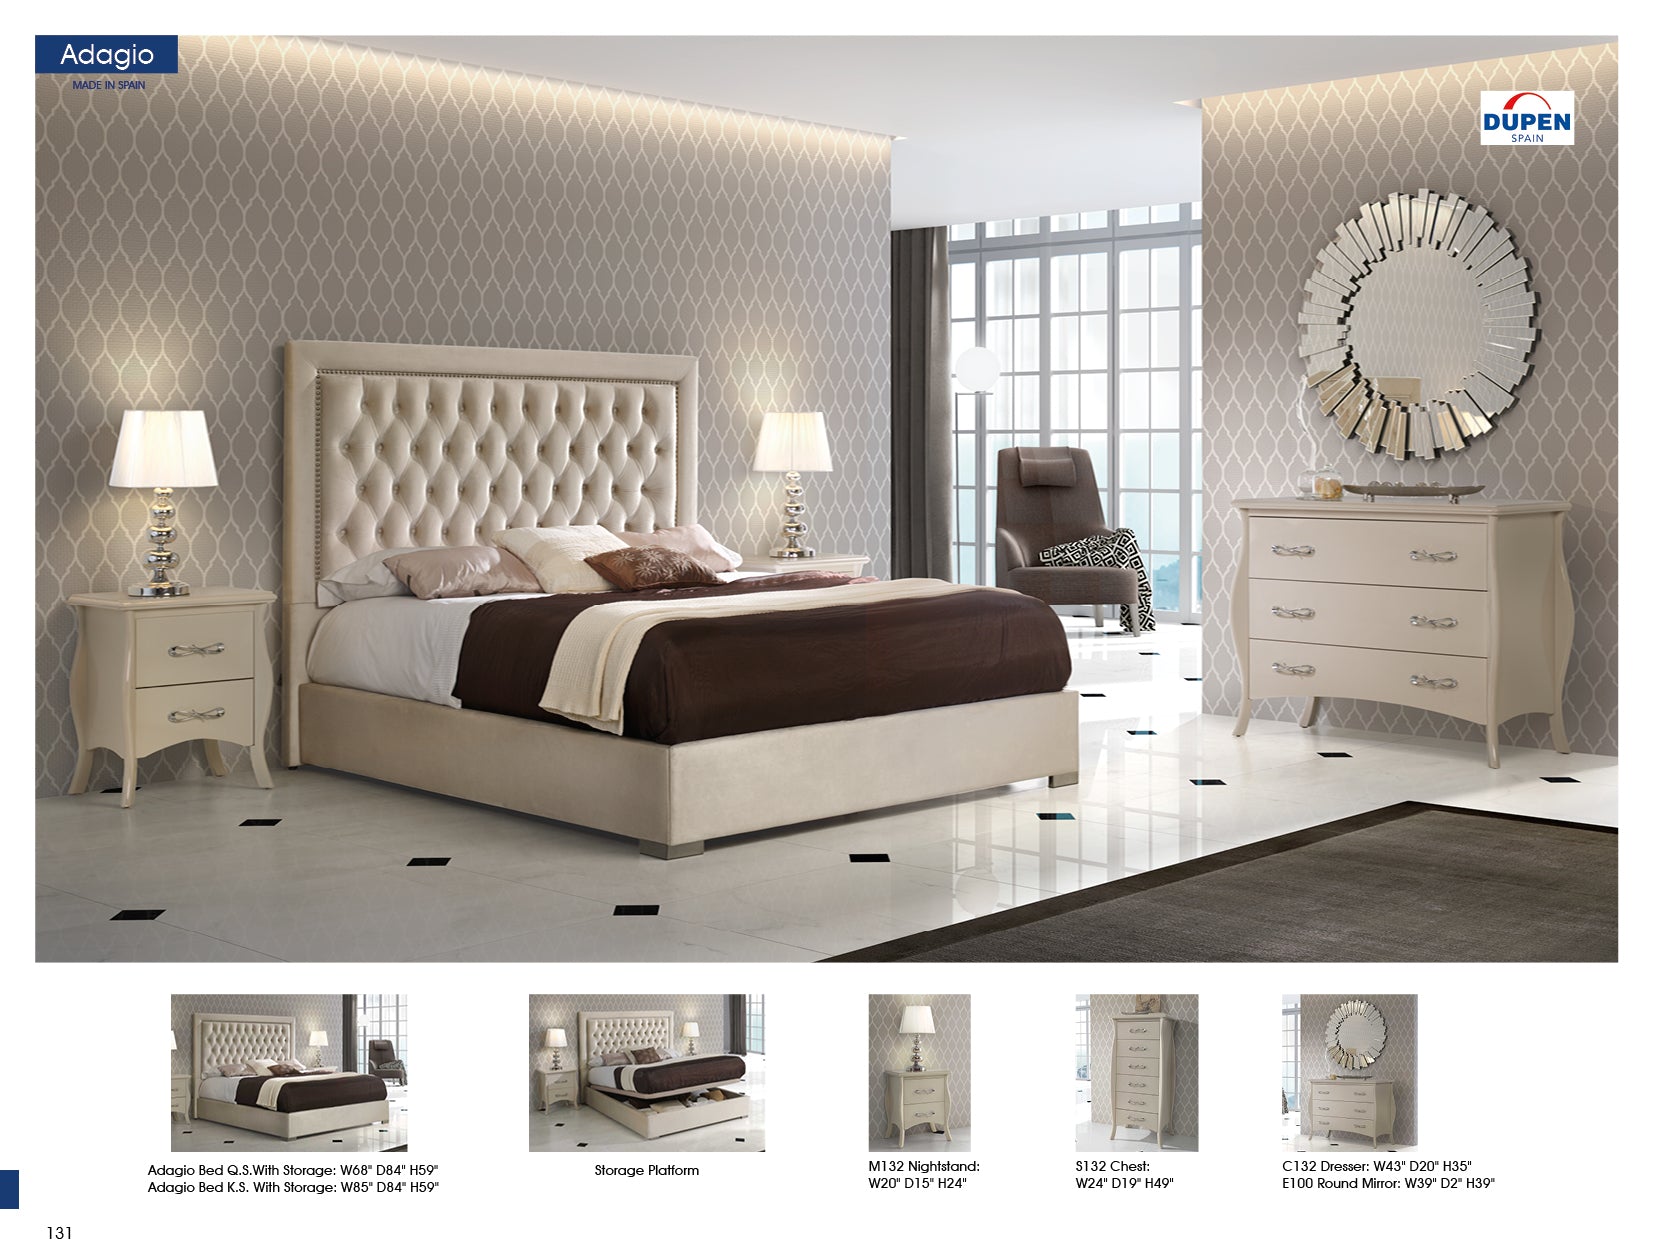 Adagio bed with Storage - Dreamart Gallery